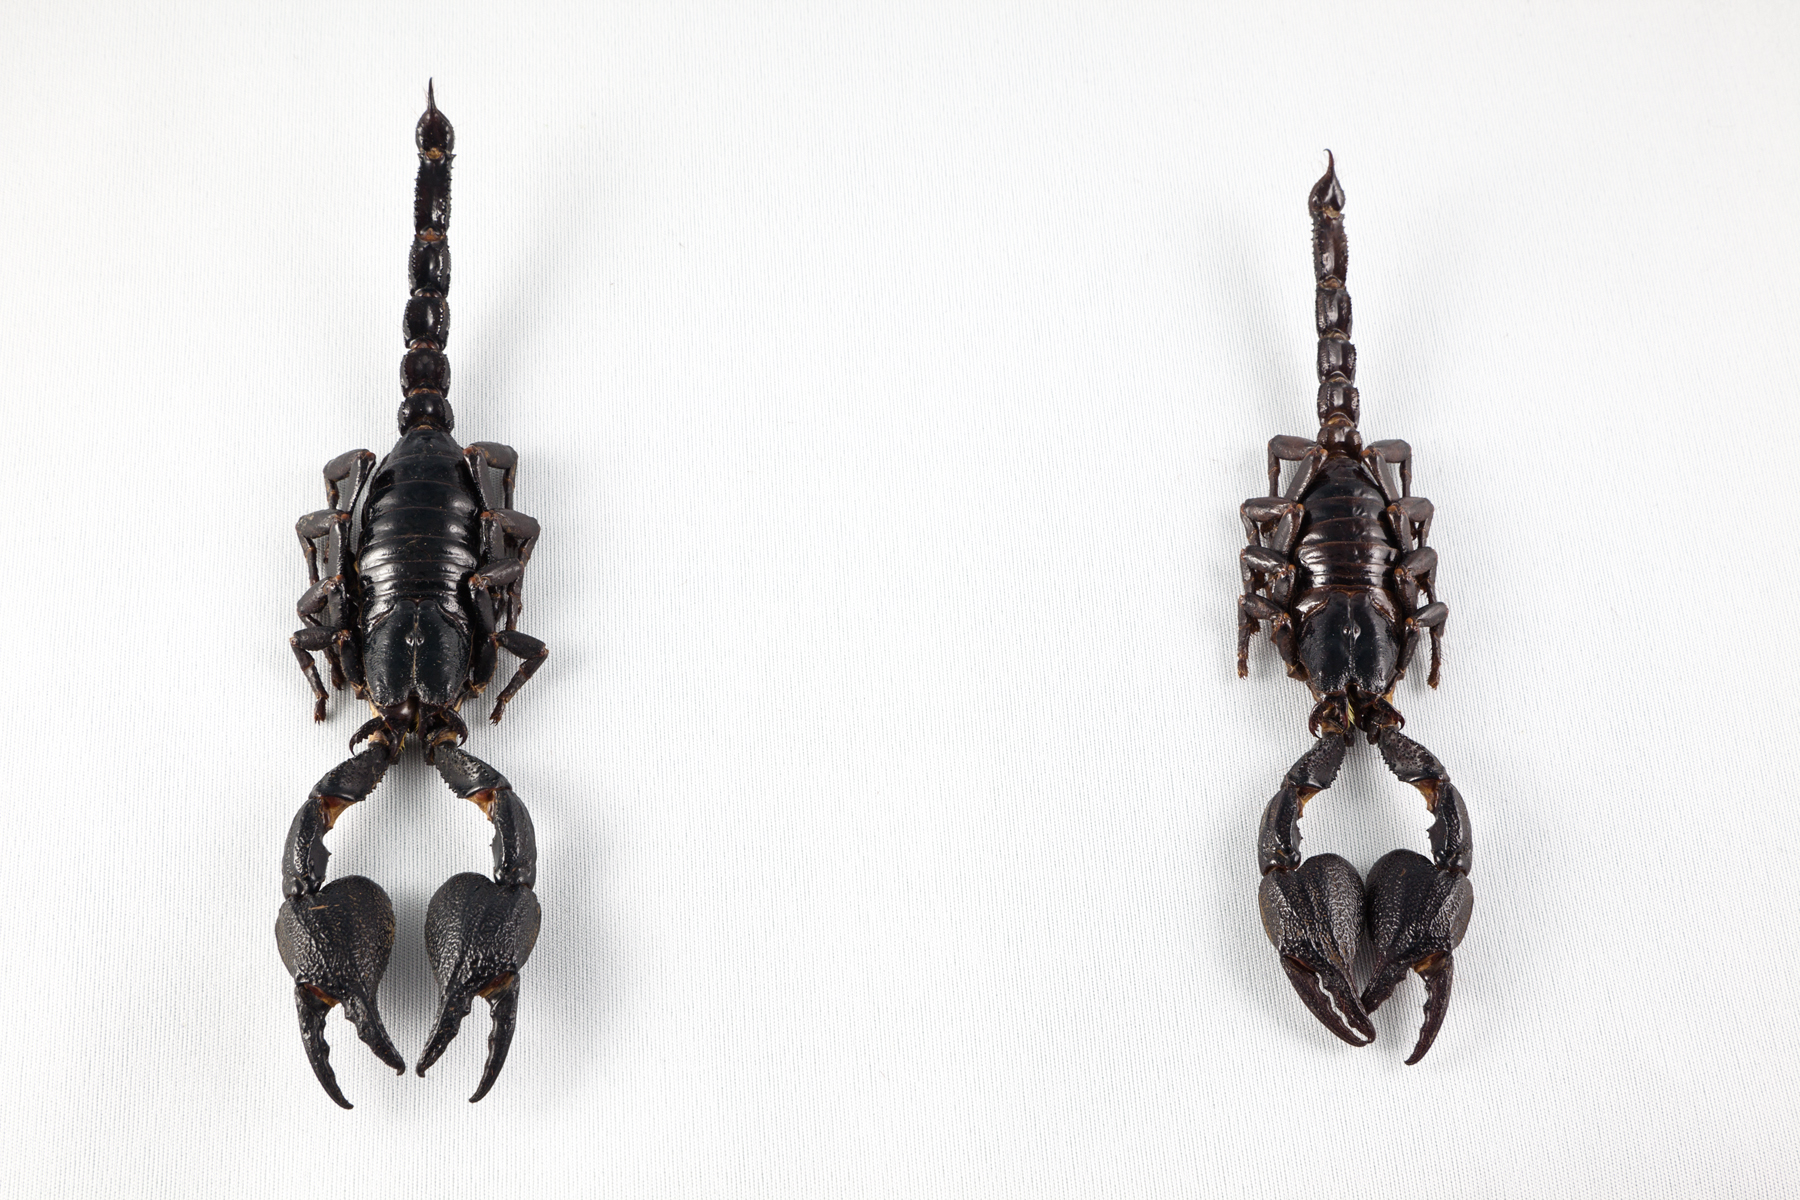 Black scorpion pair photo